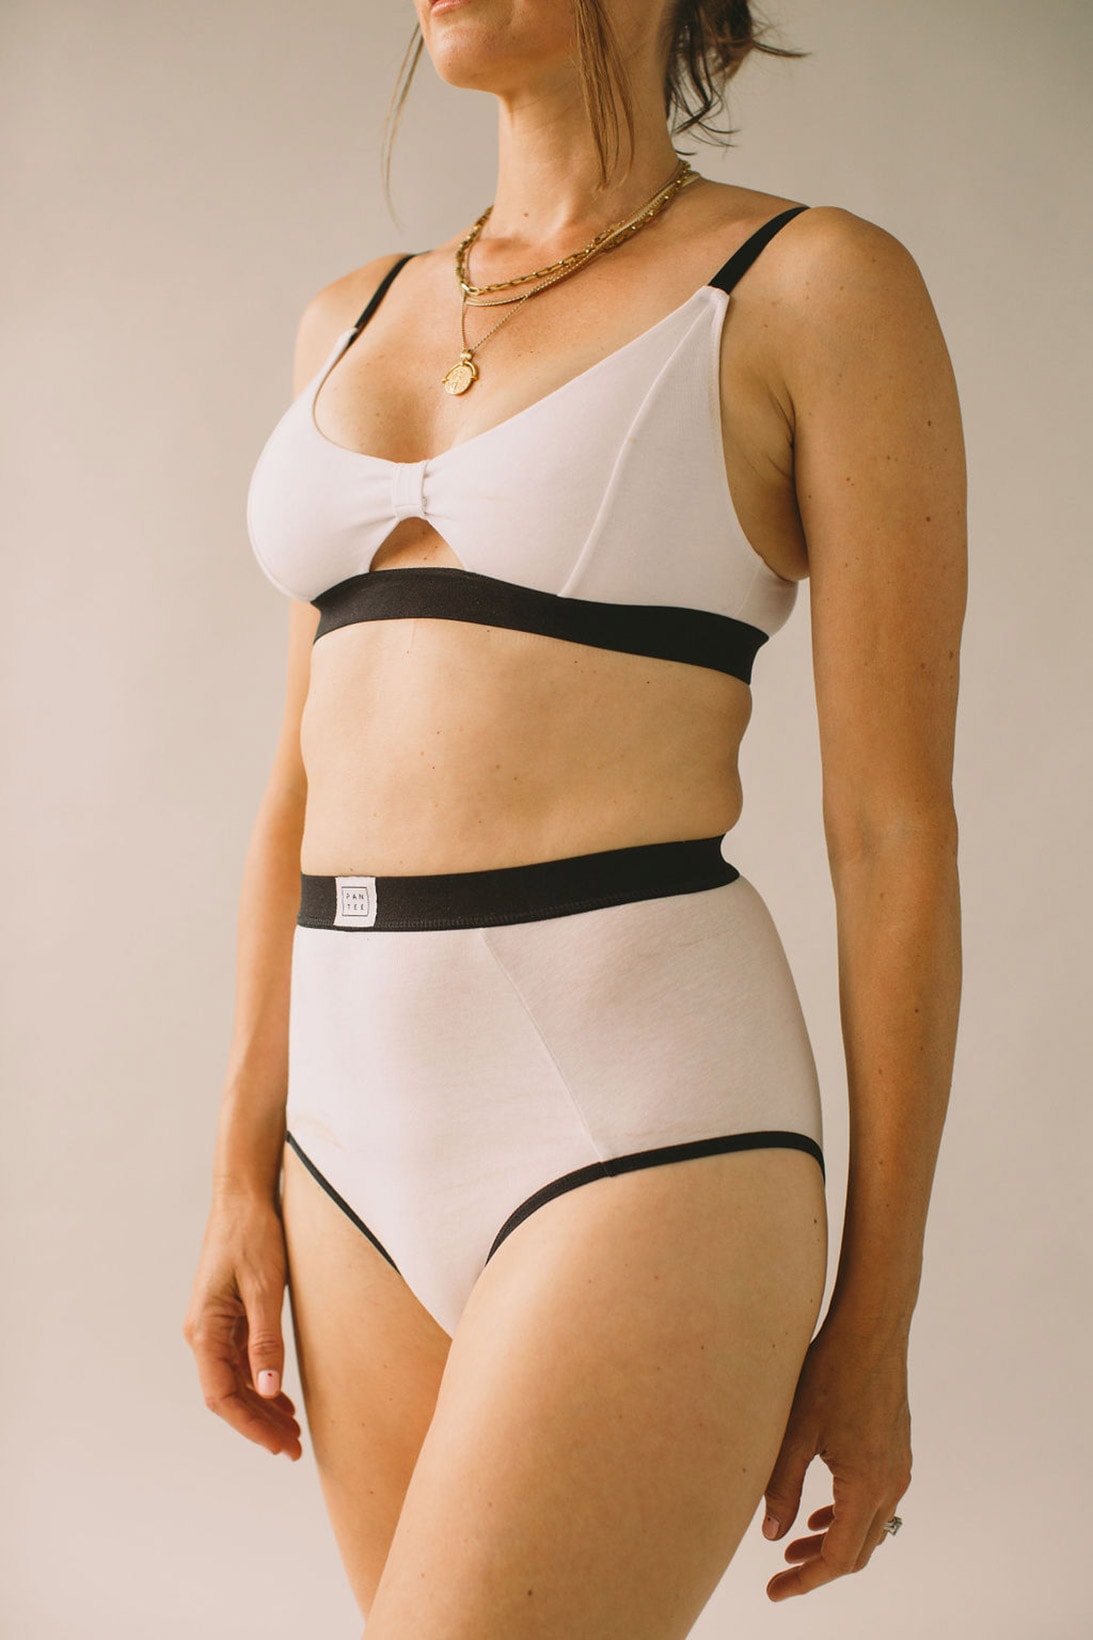 pantee sustainable underwear monochrome sets bras panties briefs deadstock eco friendly white black